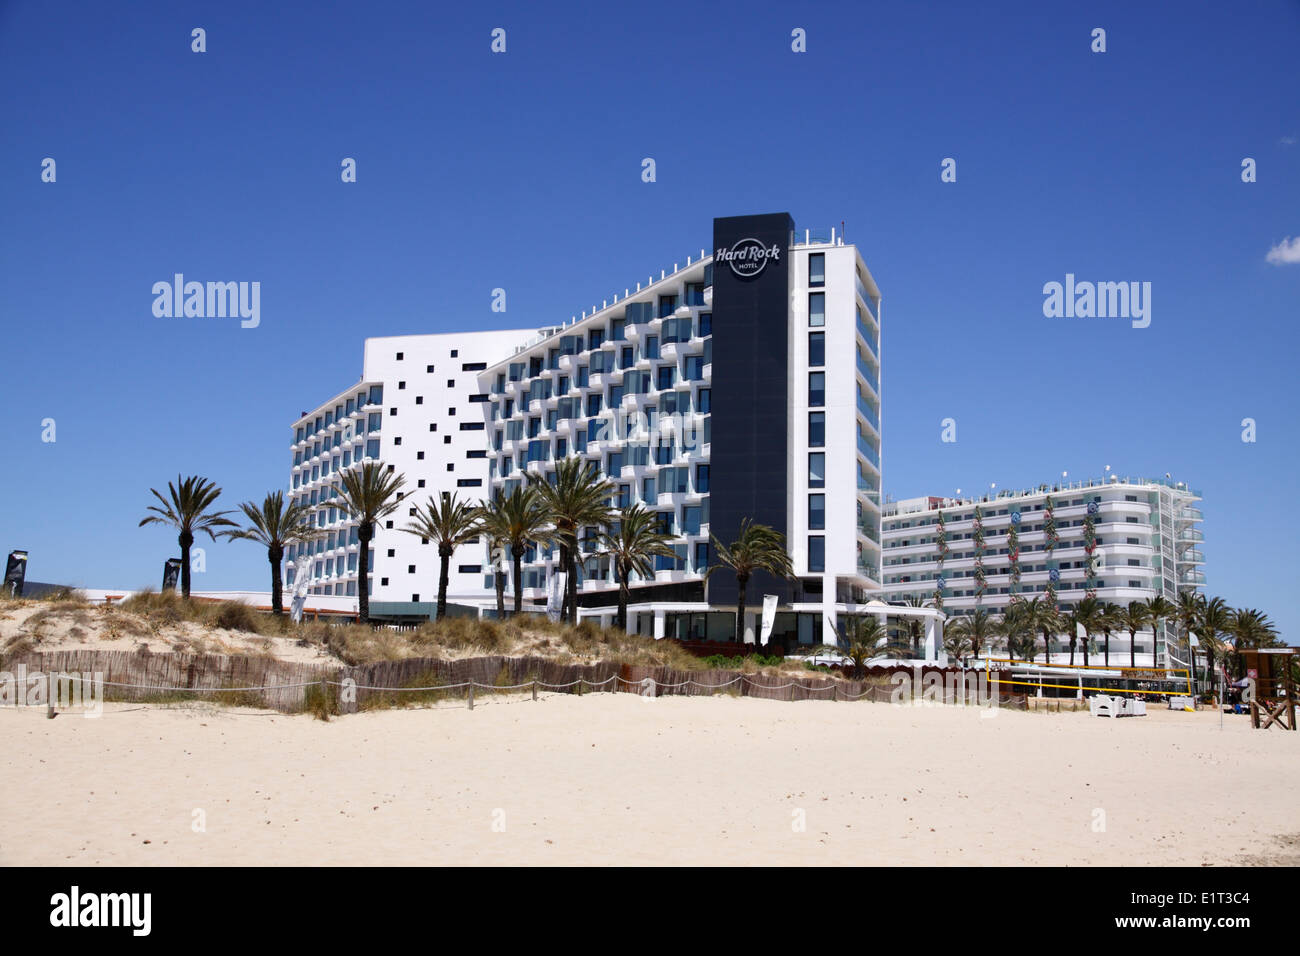 The Hard Rock Hotel, Ibiza, Spain Stock Photo - Alamy